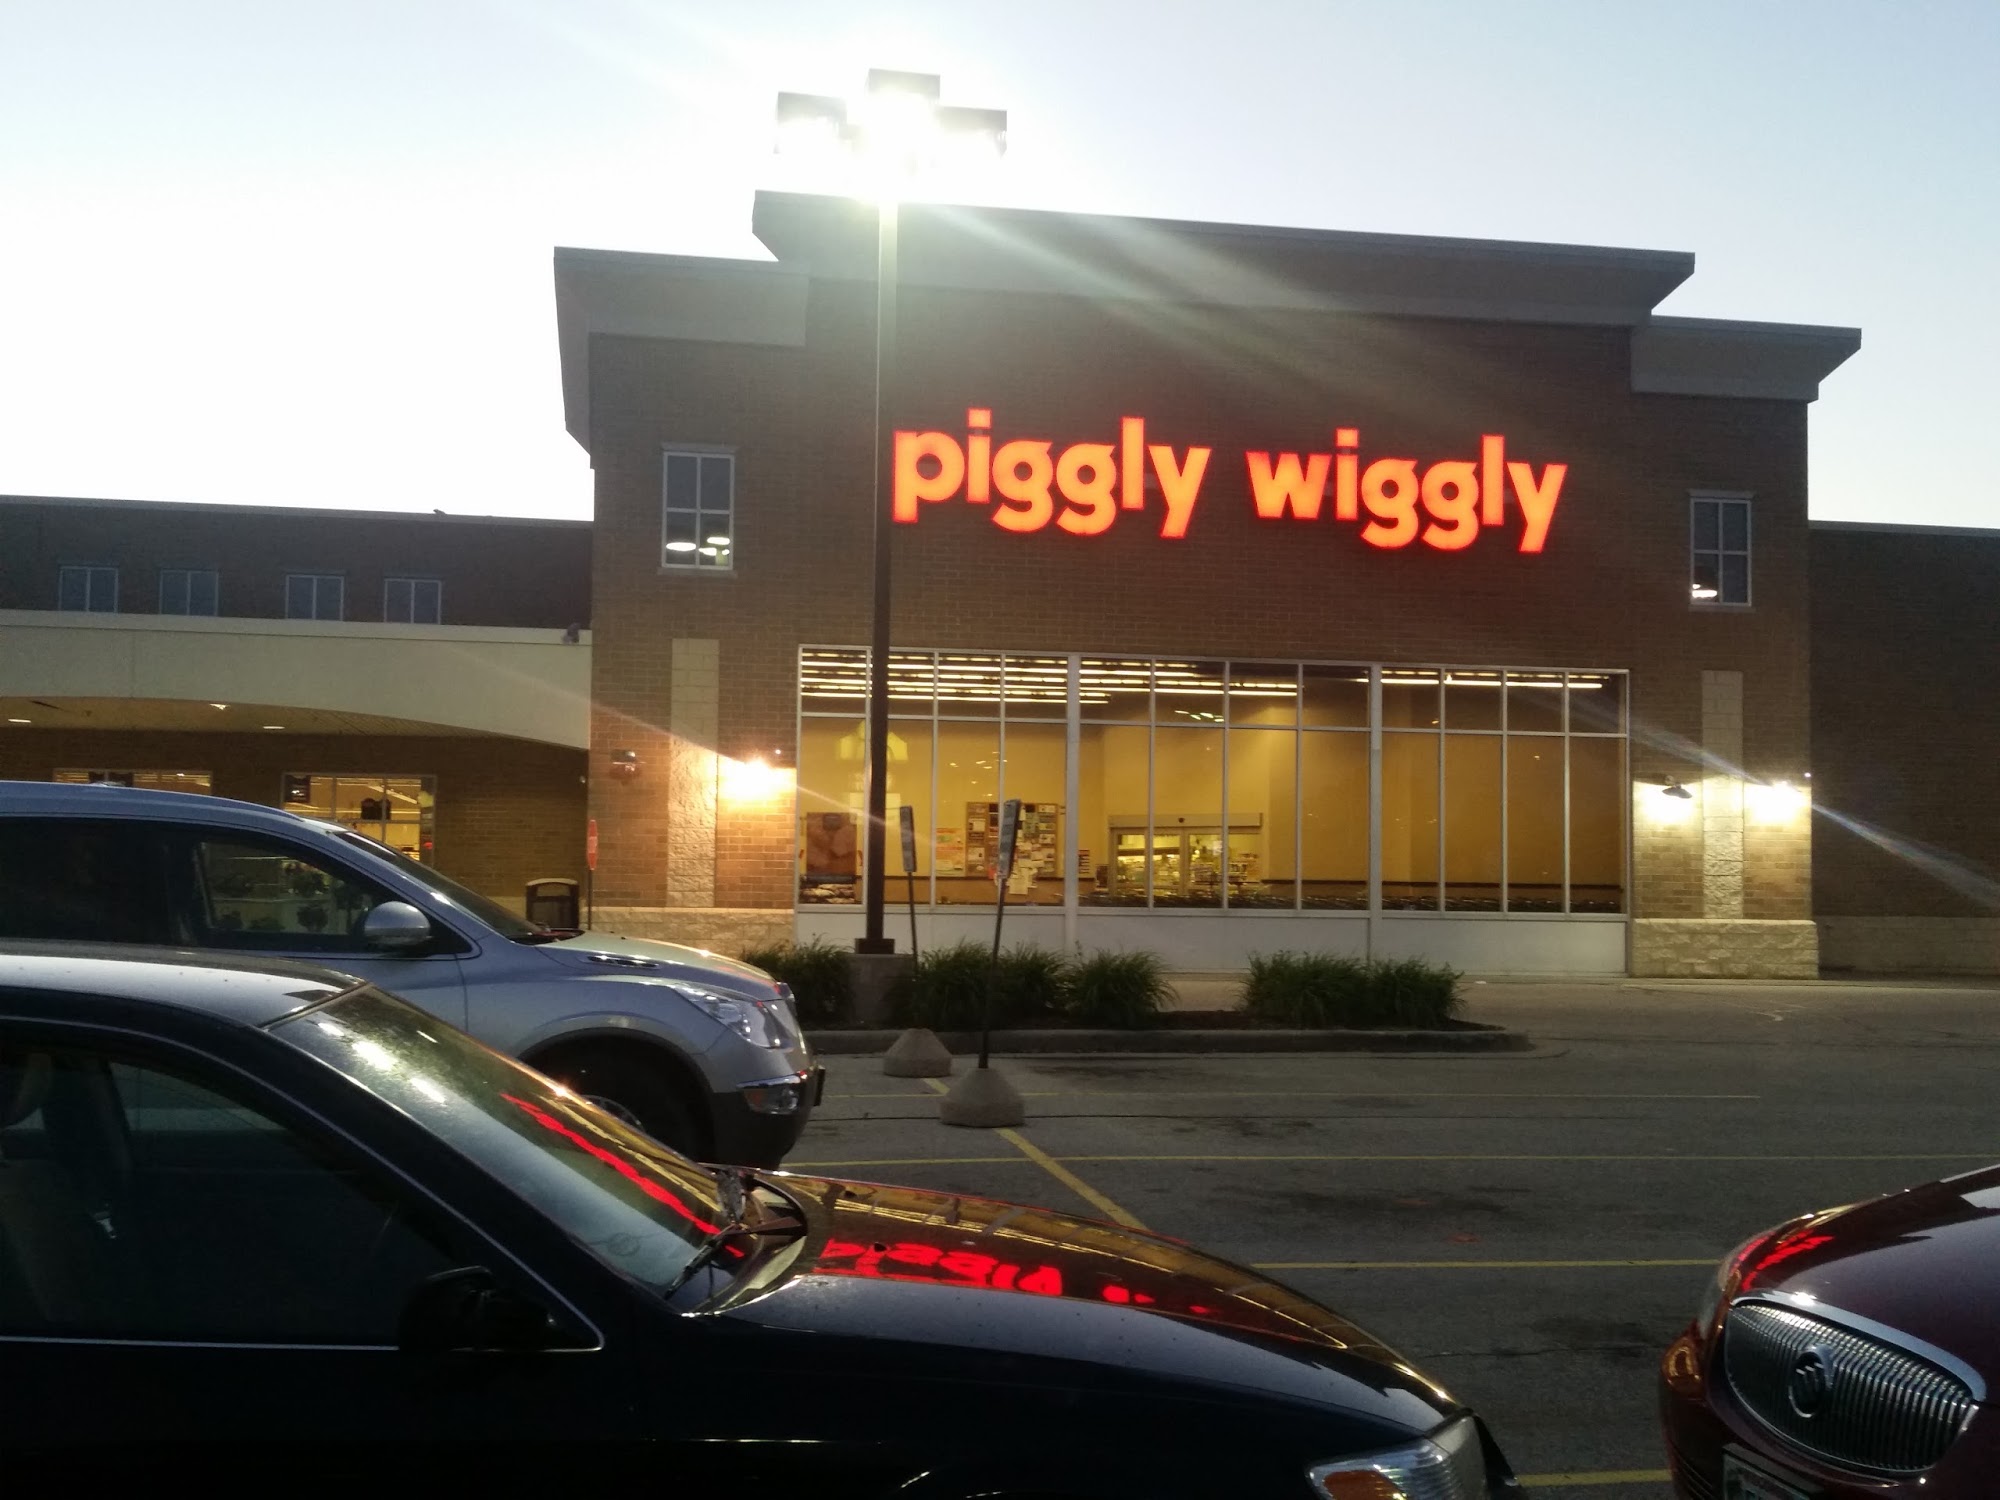 Fox Bros. Piggly Wiggly